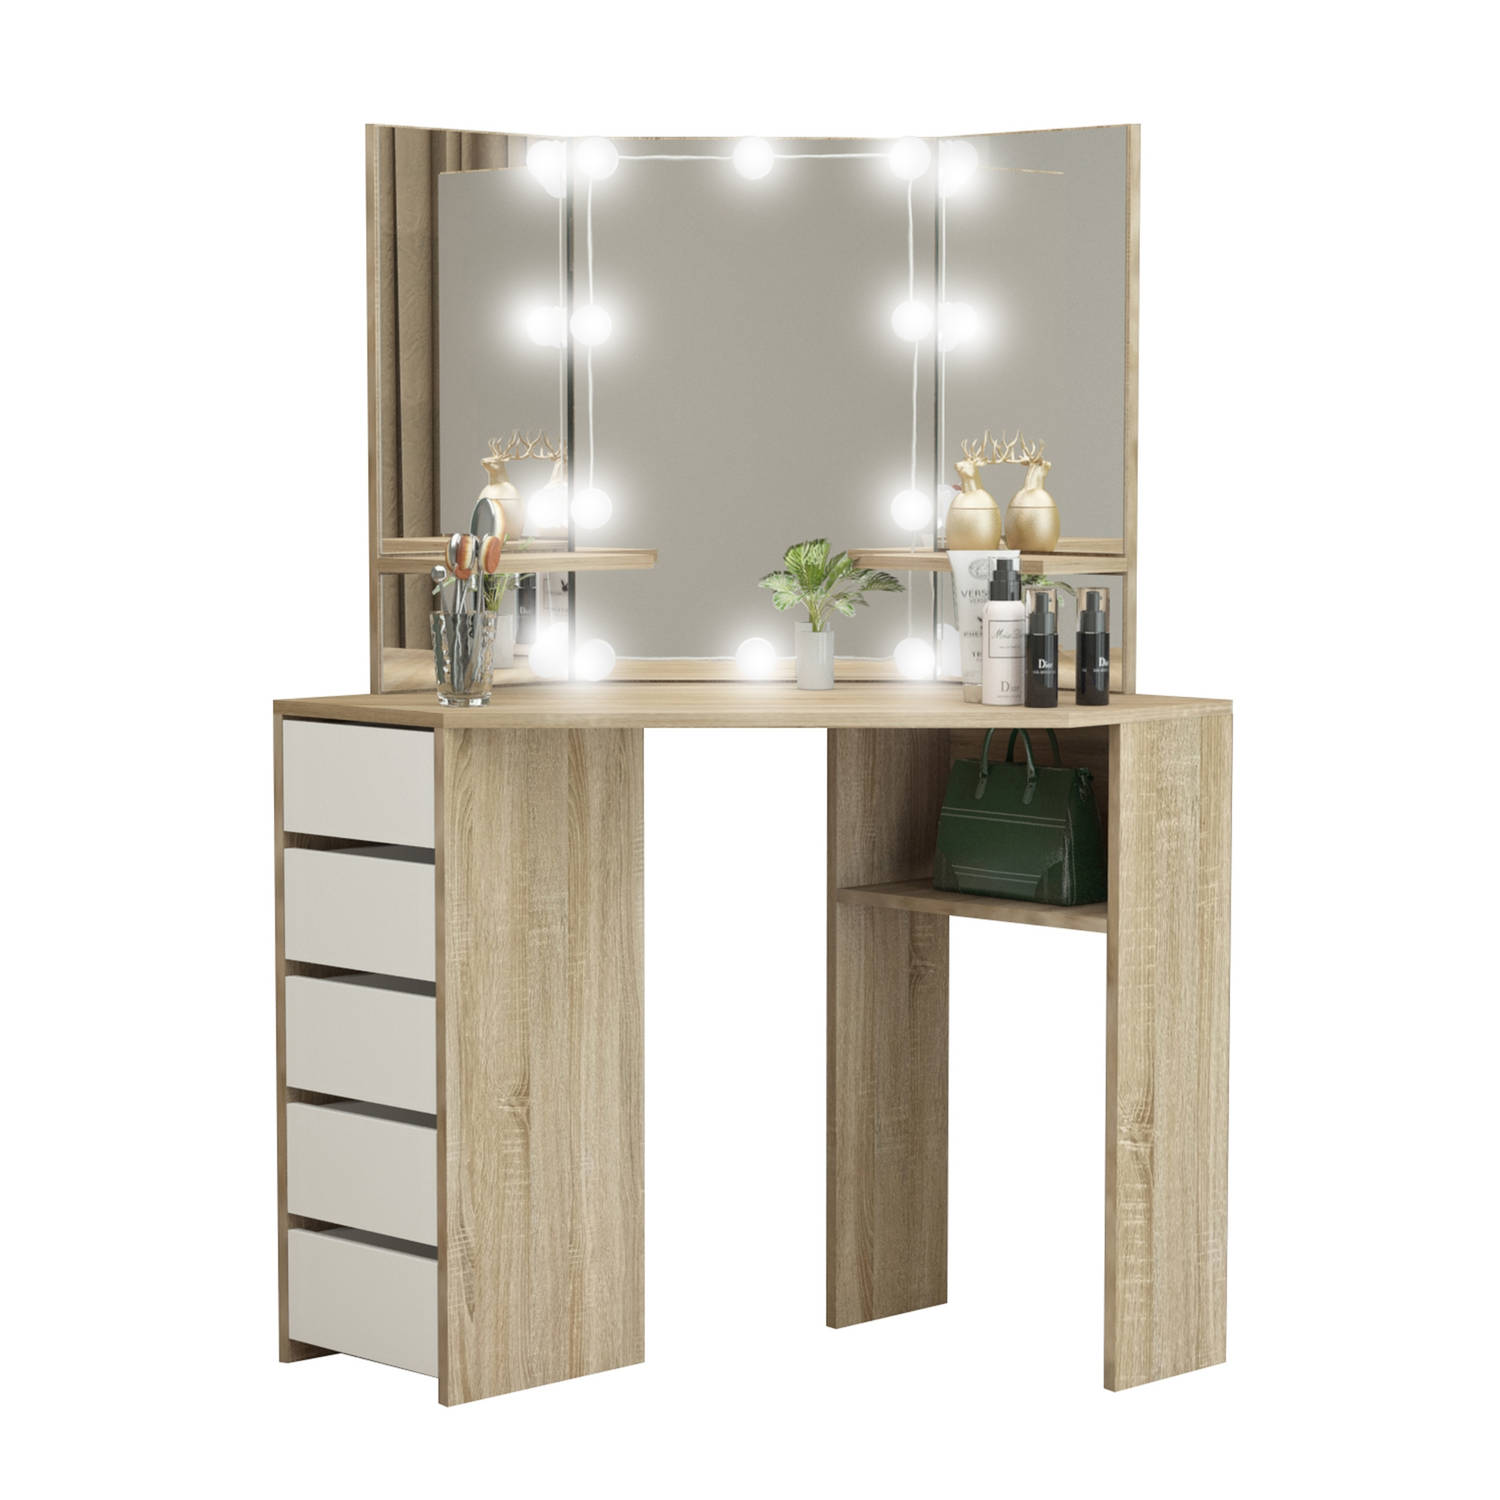 Ml-design Hoek Kaptafel Sonoma Met Led Verlichting, 3 Spiegels, Zwart Krukje, 5 Laden & 3 Legplanken